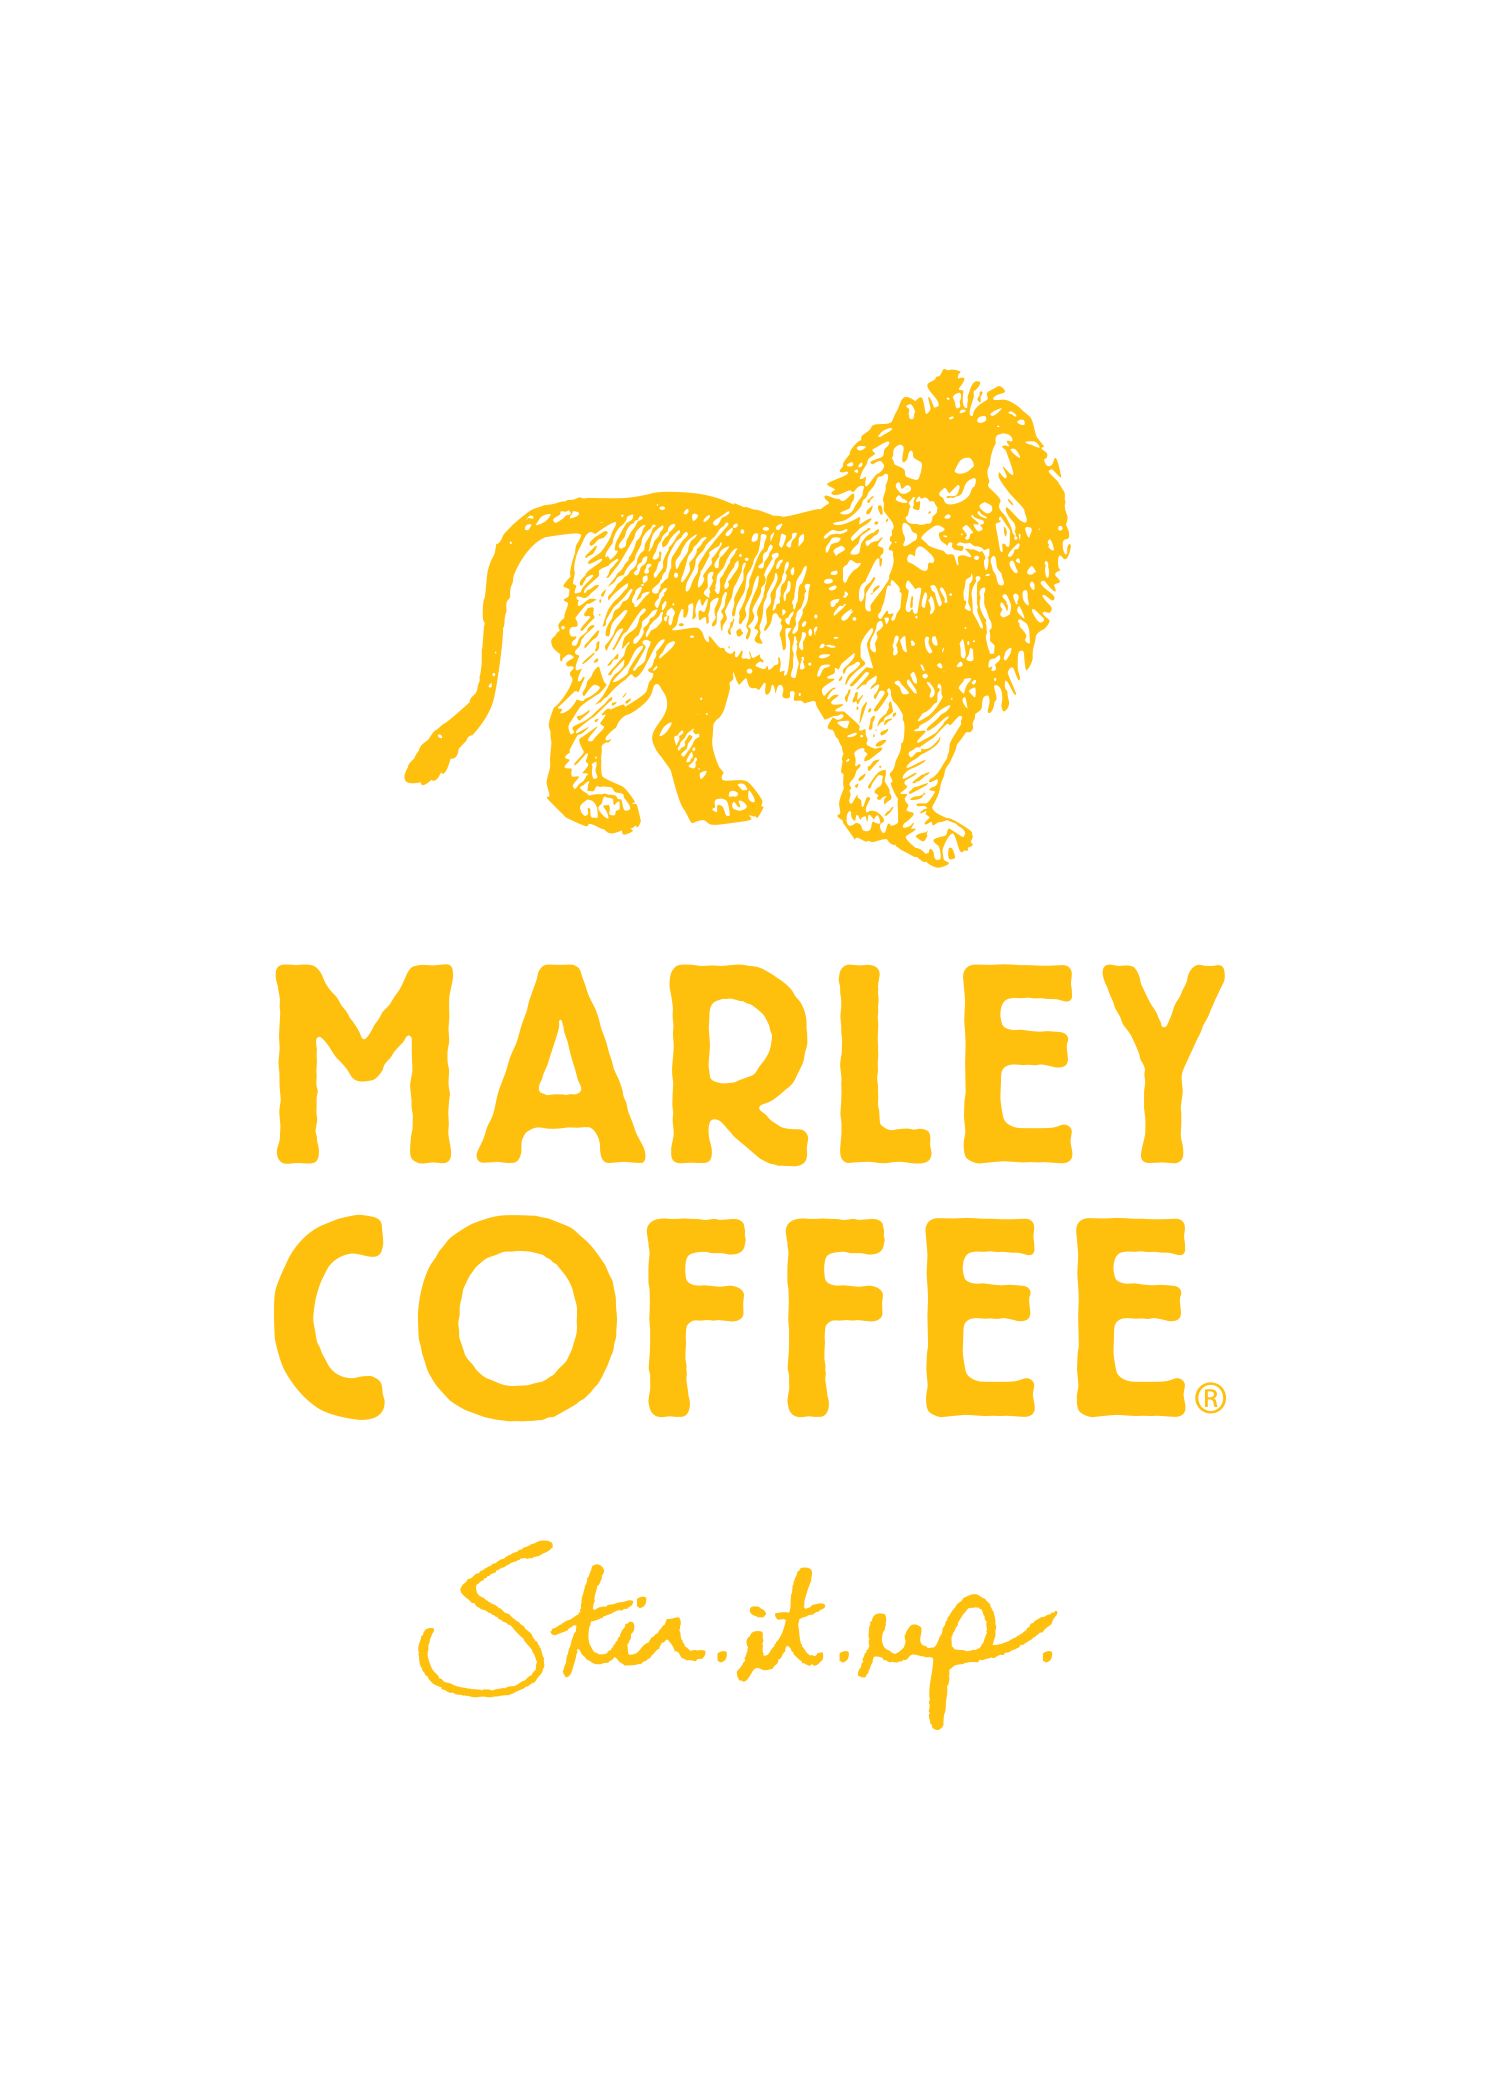 Marley Coffee Adds J